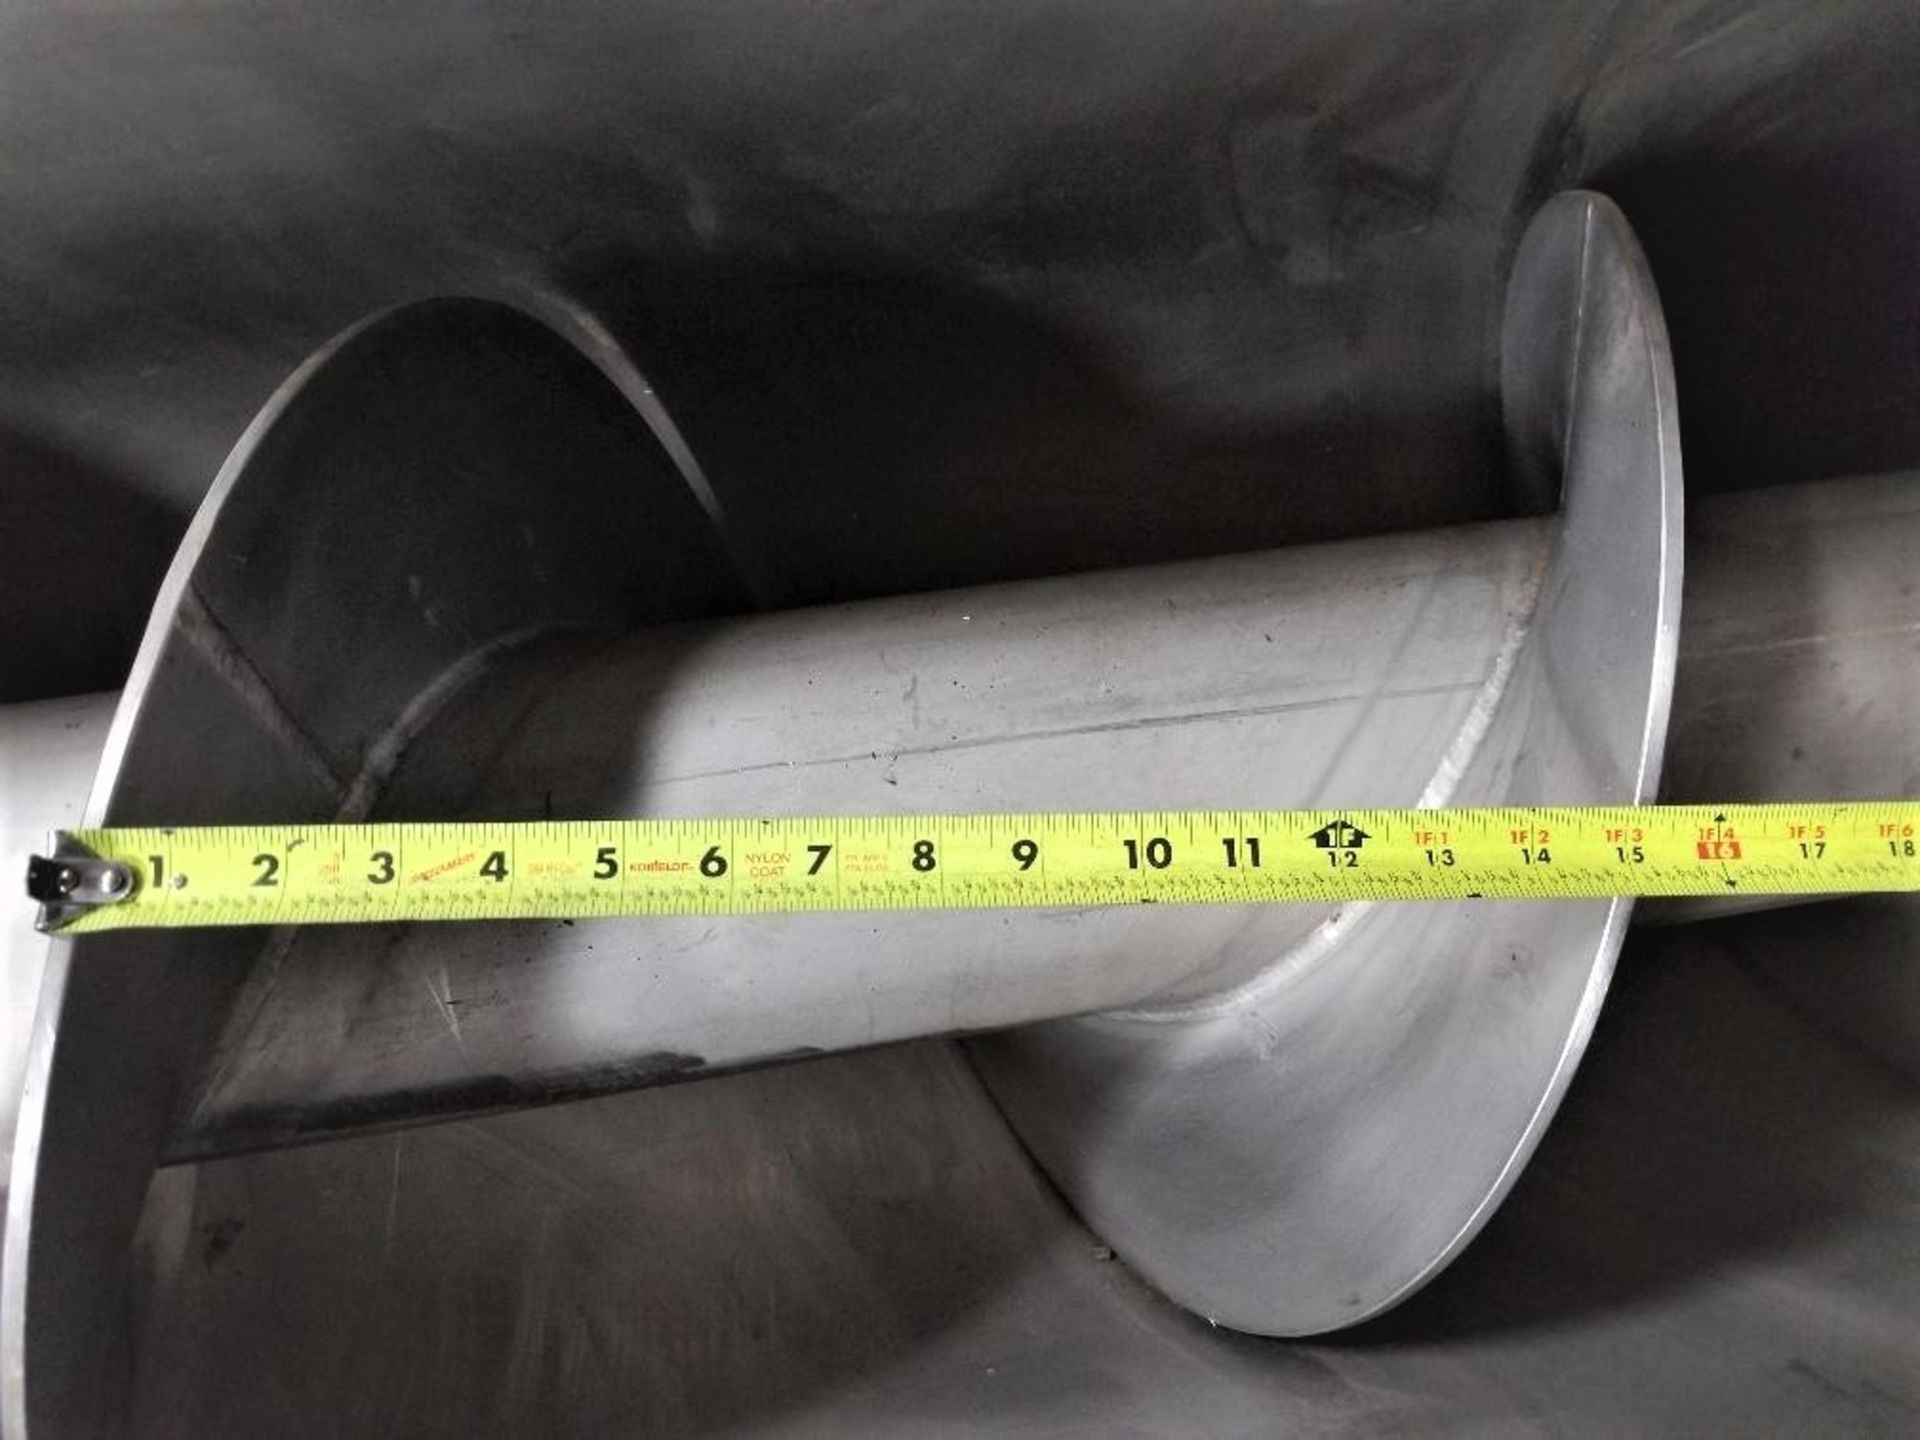 Mepaco S/S Sanitary Incline Screw/Auger Conveyor, Model 185, S/N 6332-1 with16" Diameter Hopper, - Image 4 of 18